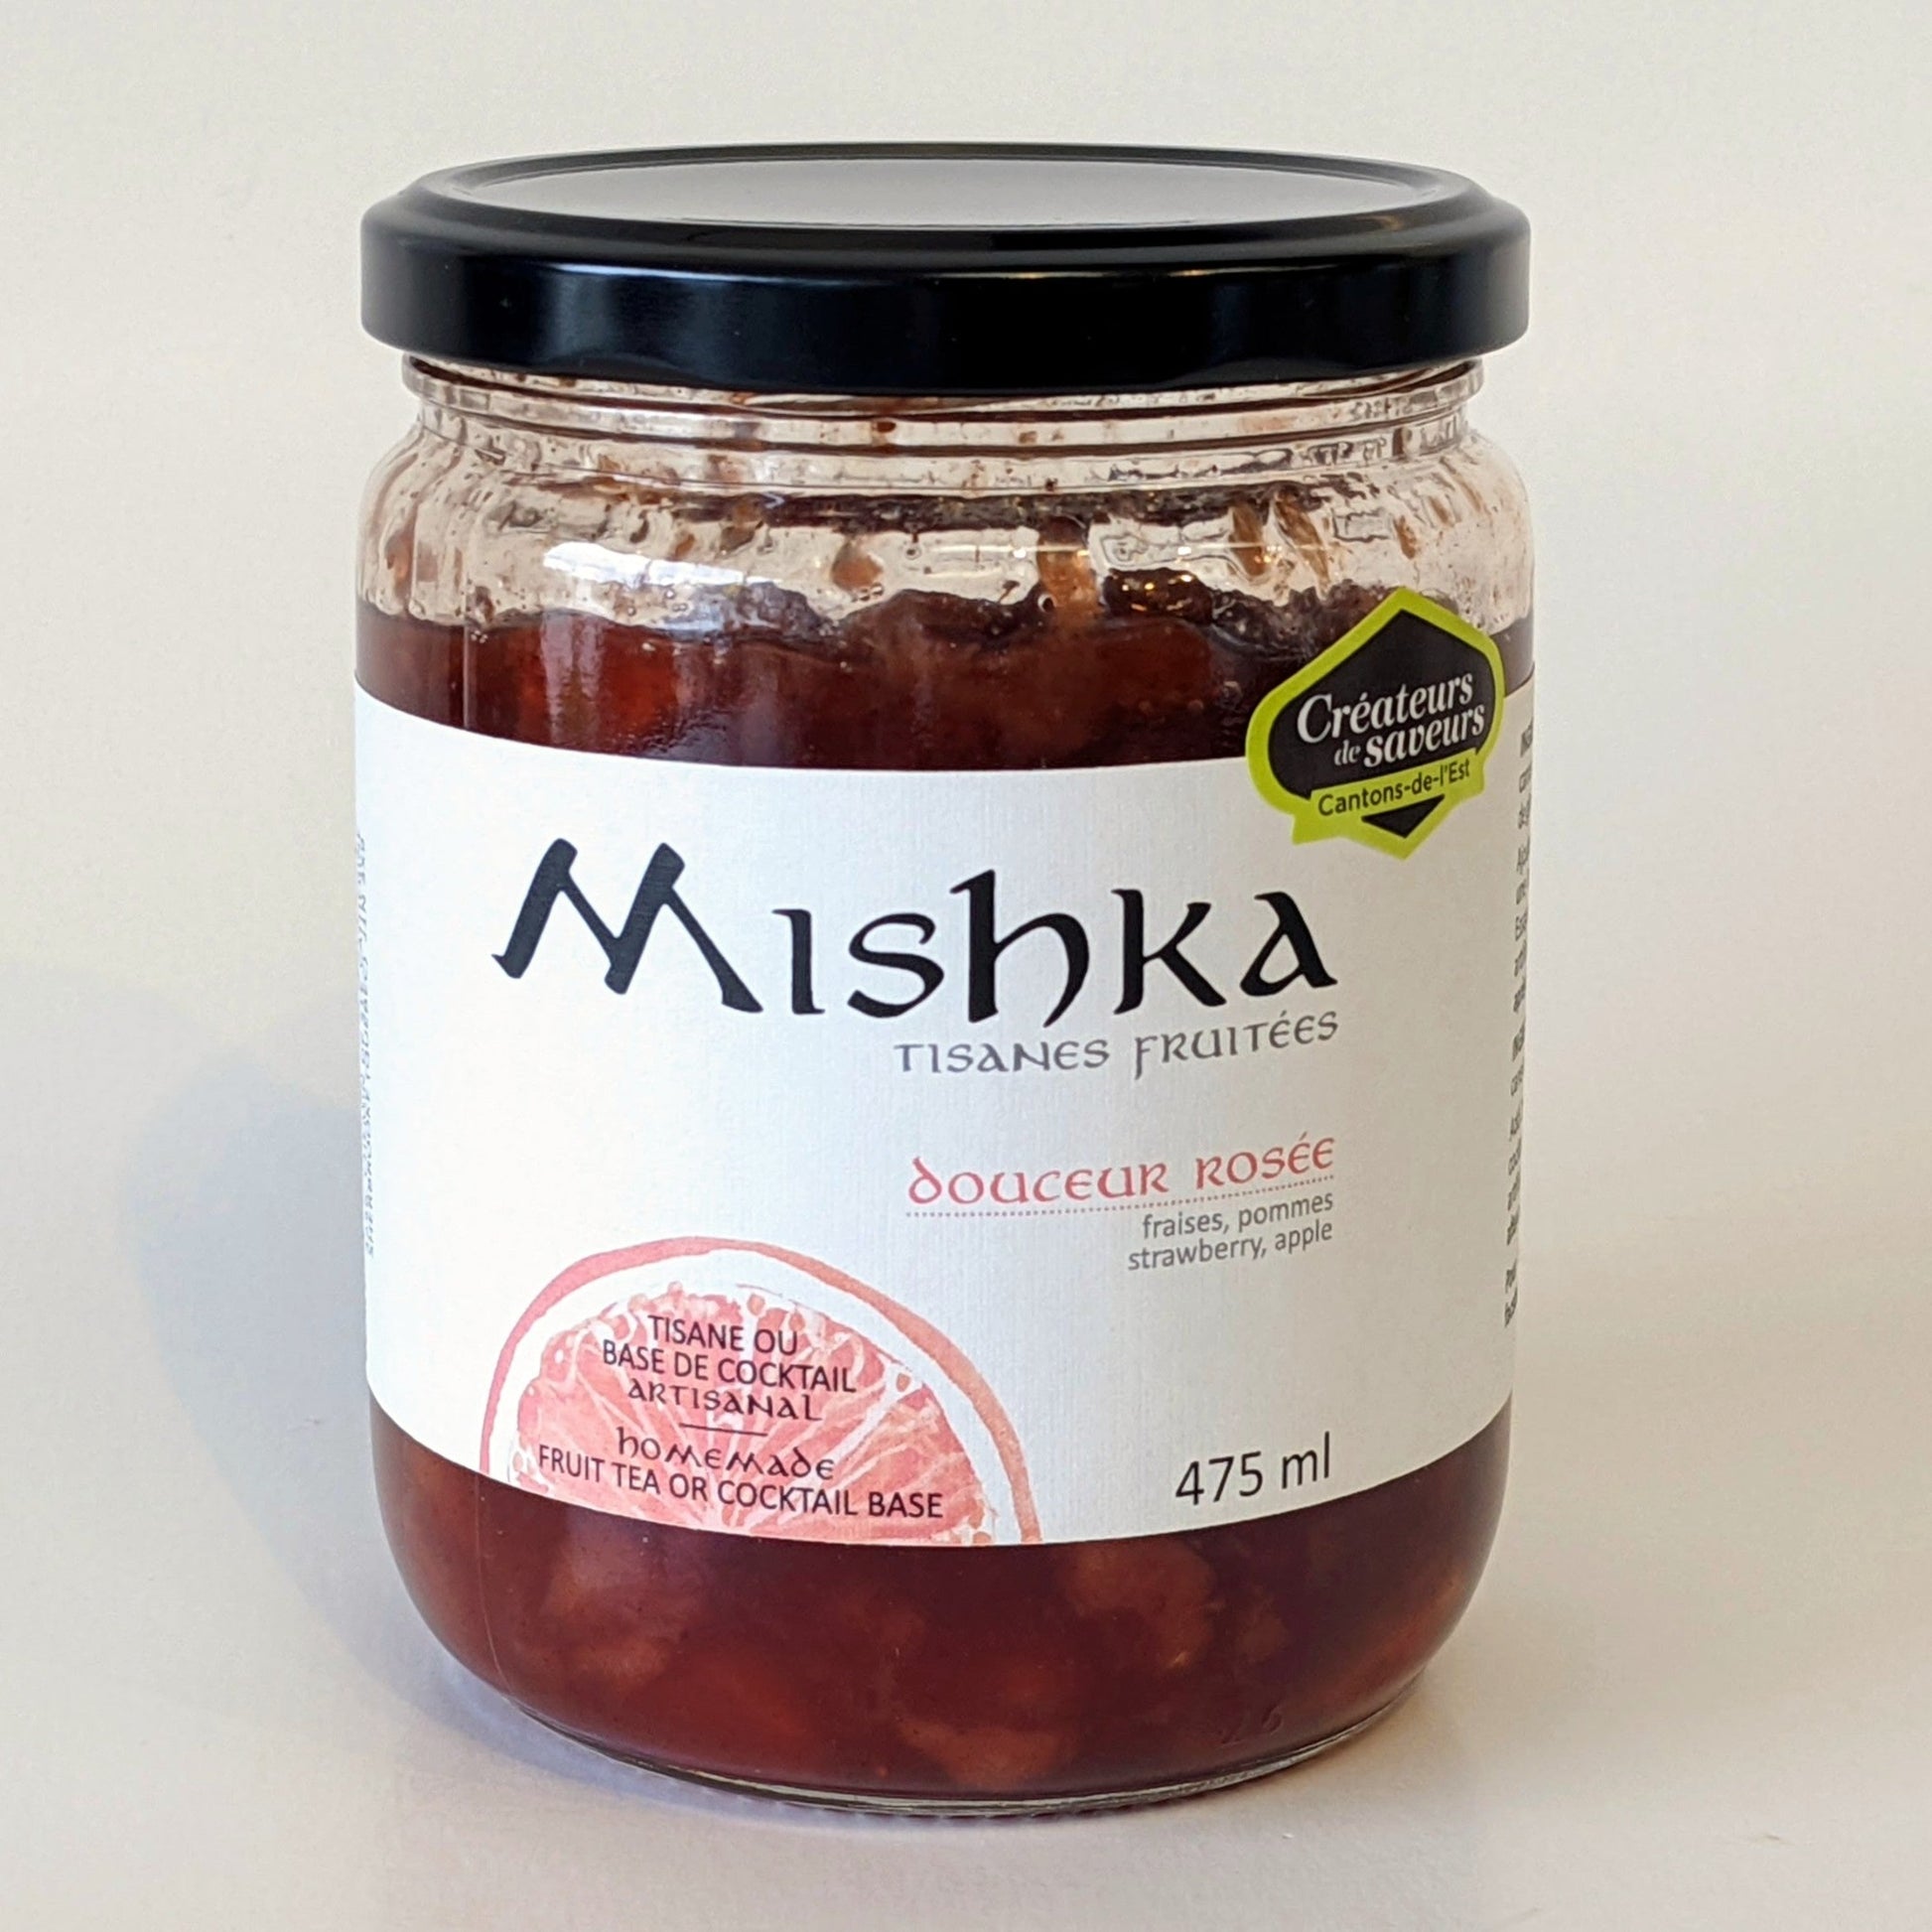 Mishka - Douceur rosée 475 ml